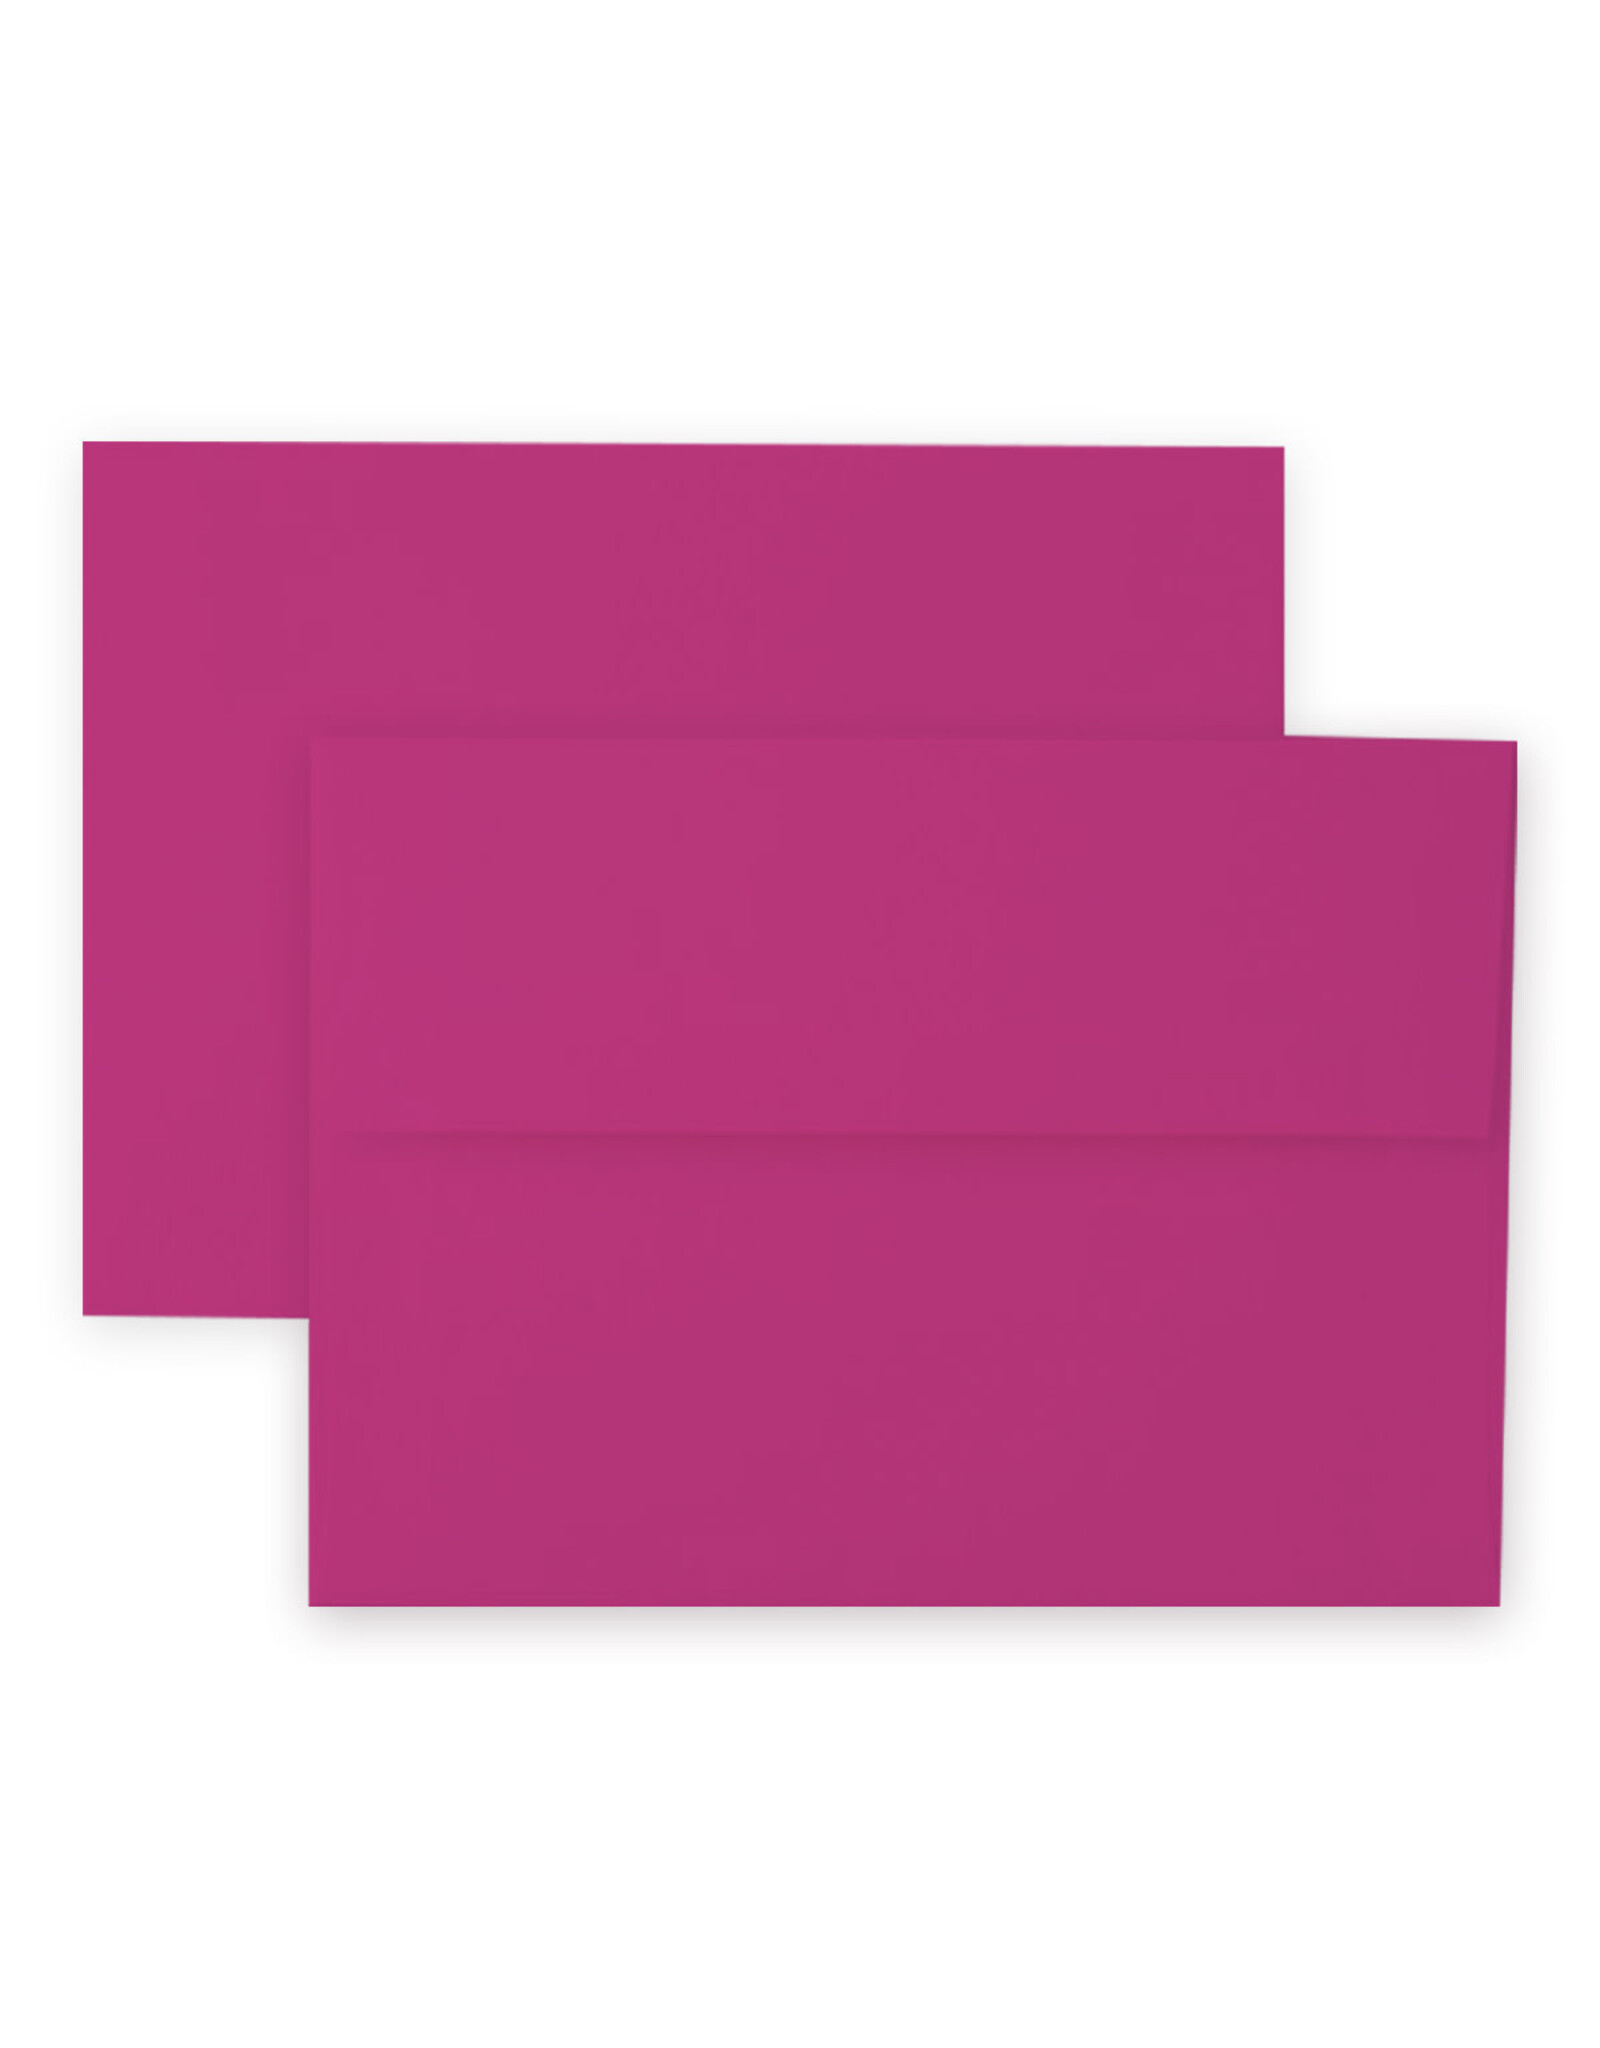 ALTENEW Craft Essentials- A2 Envelopes 12 pcs- Razzleberry